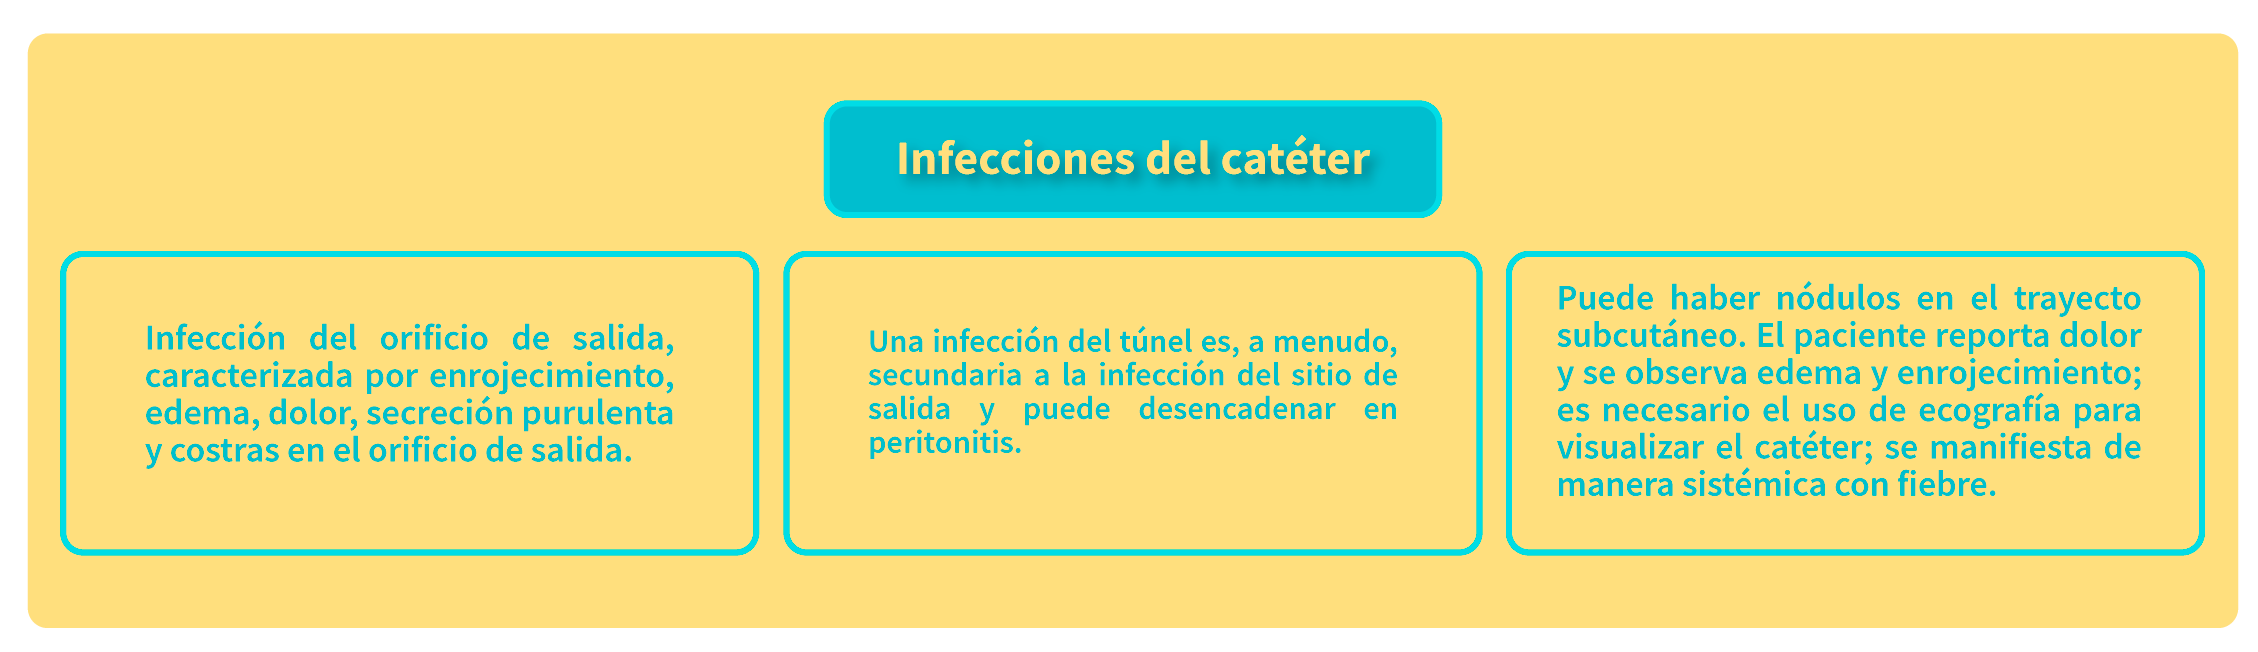 Posibles infecciones del catéter para DP